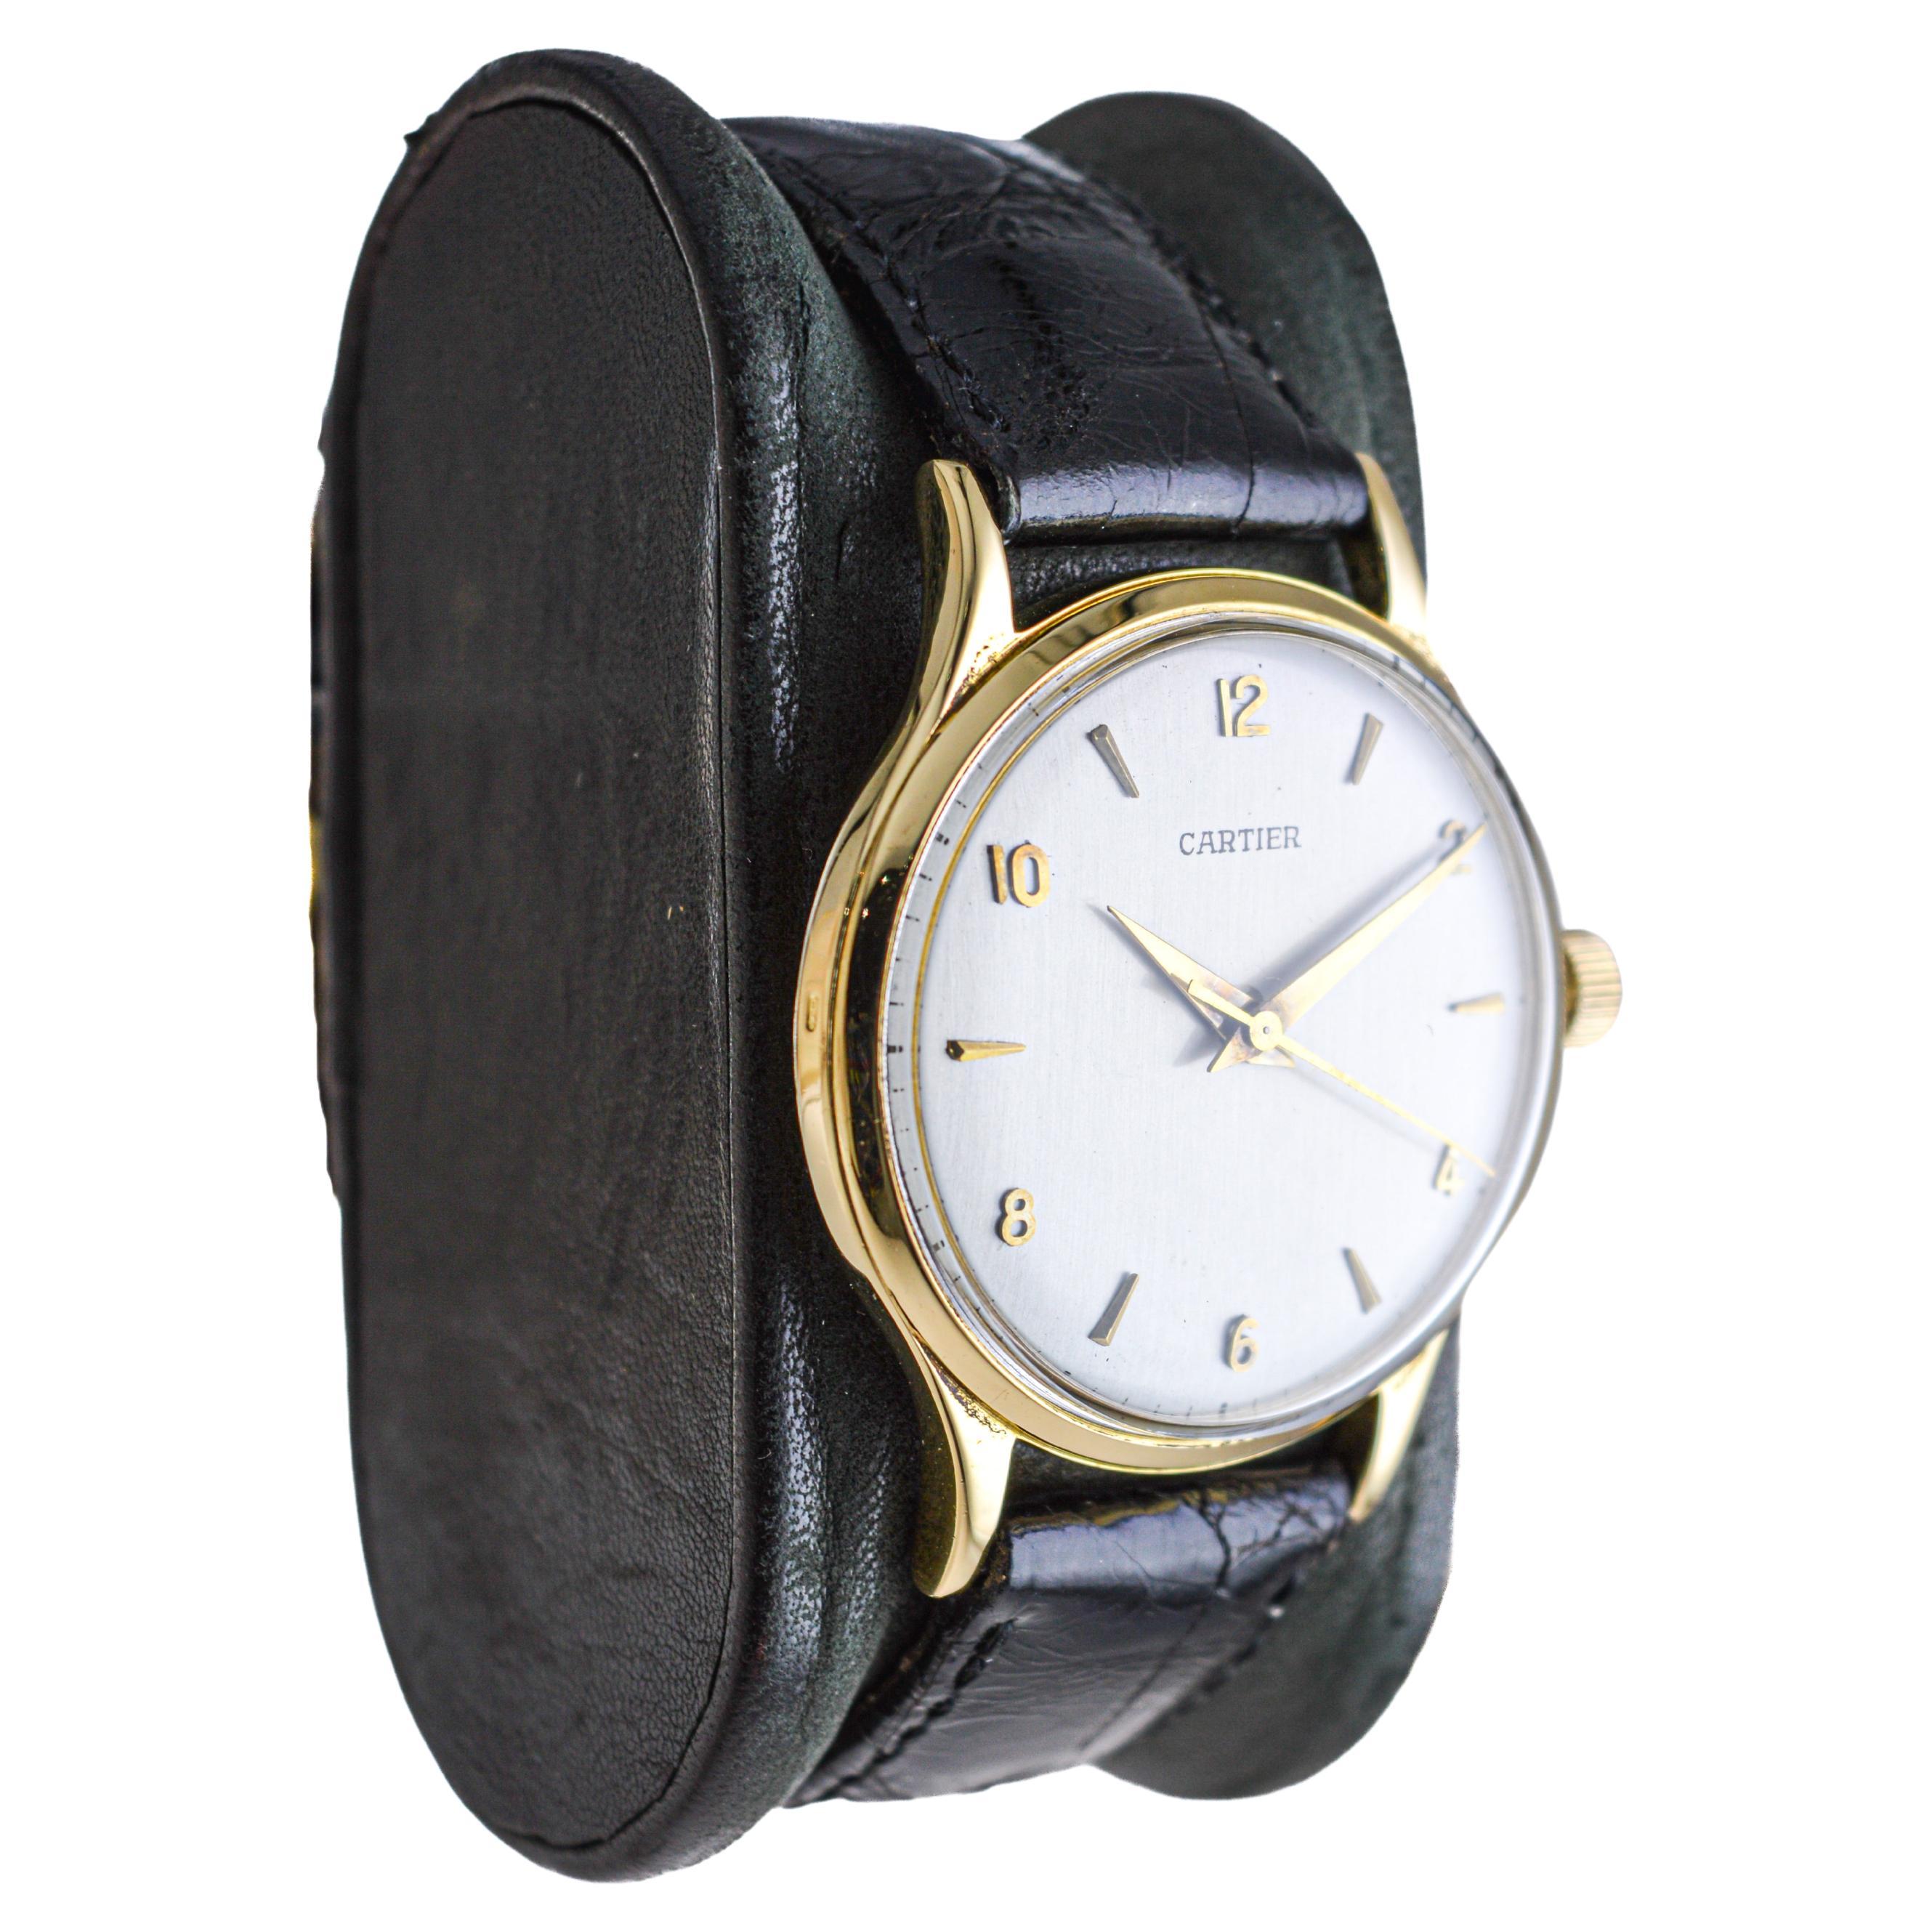 Cartier Paris 18Kt. Gold Calatrava Style Watch, from 1950's European Watch Co.  For Sale 3